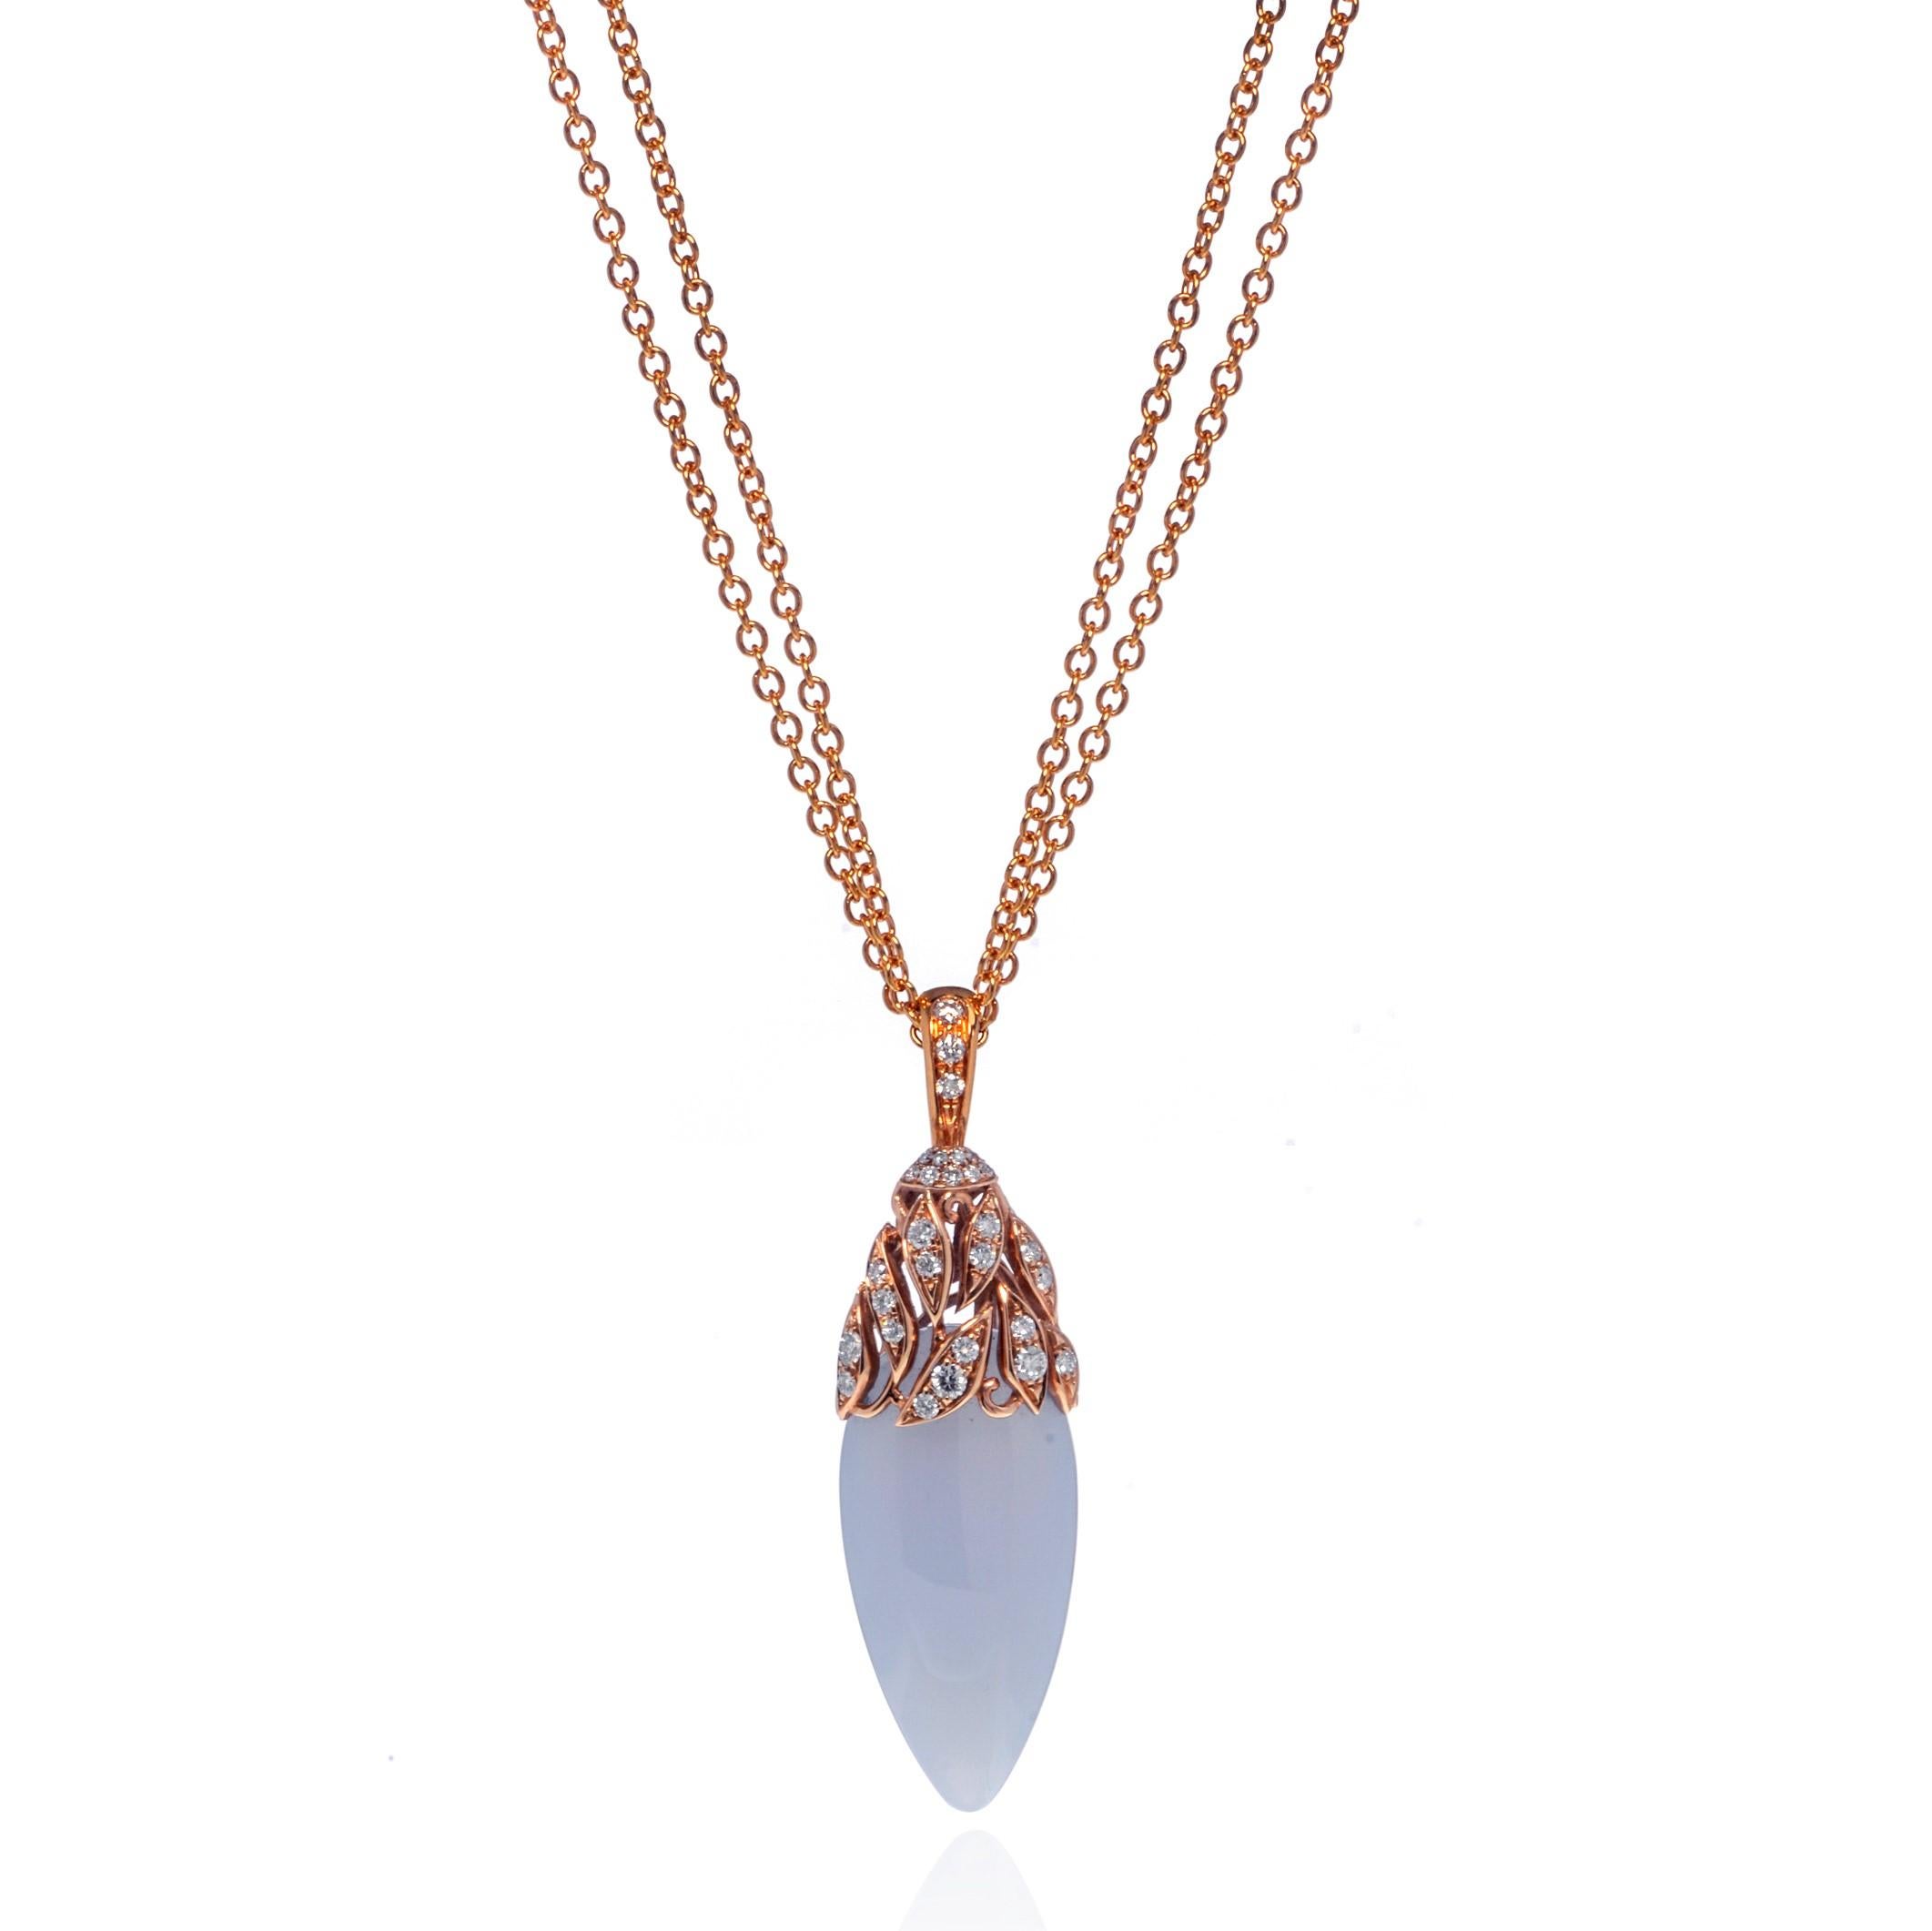 Round Cut Luca Carati Chalcedony Diamond Long Pendant Necklace 18K Rose Gold For Sale